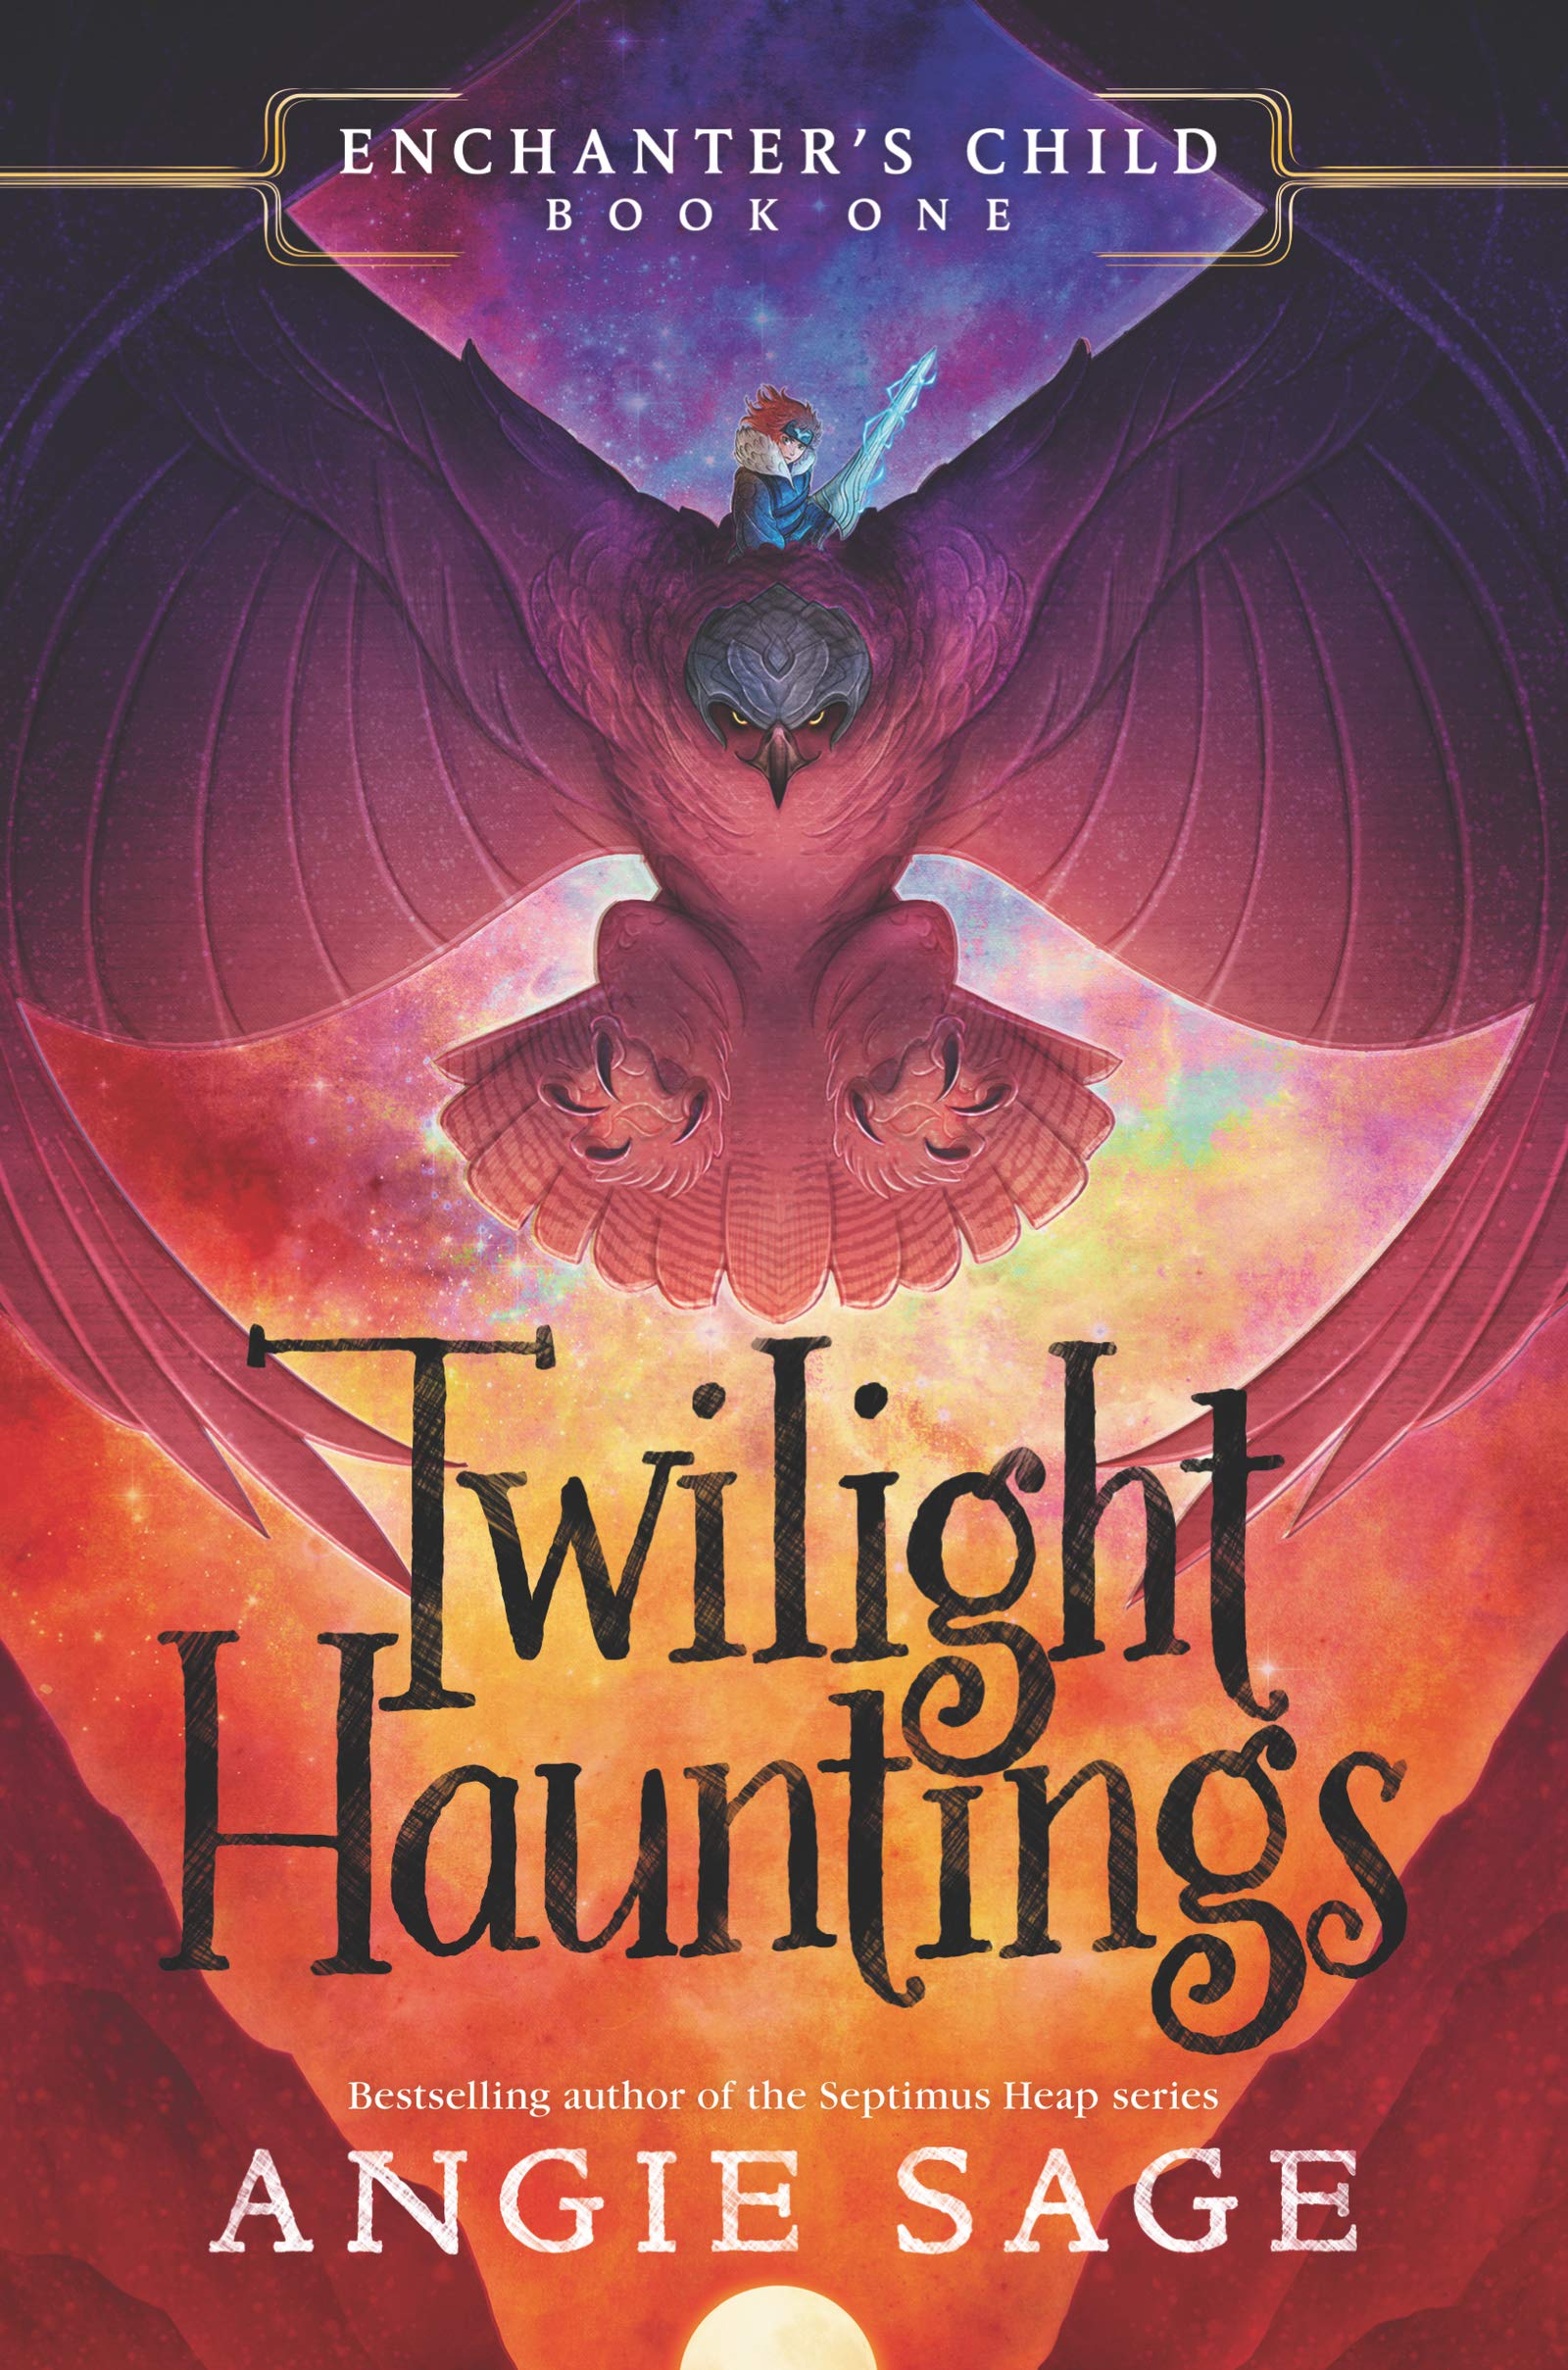 Enchanter's Child, Book One: Twilight